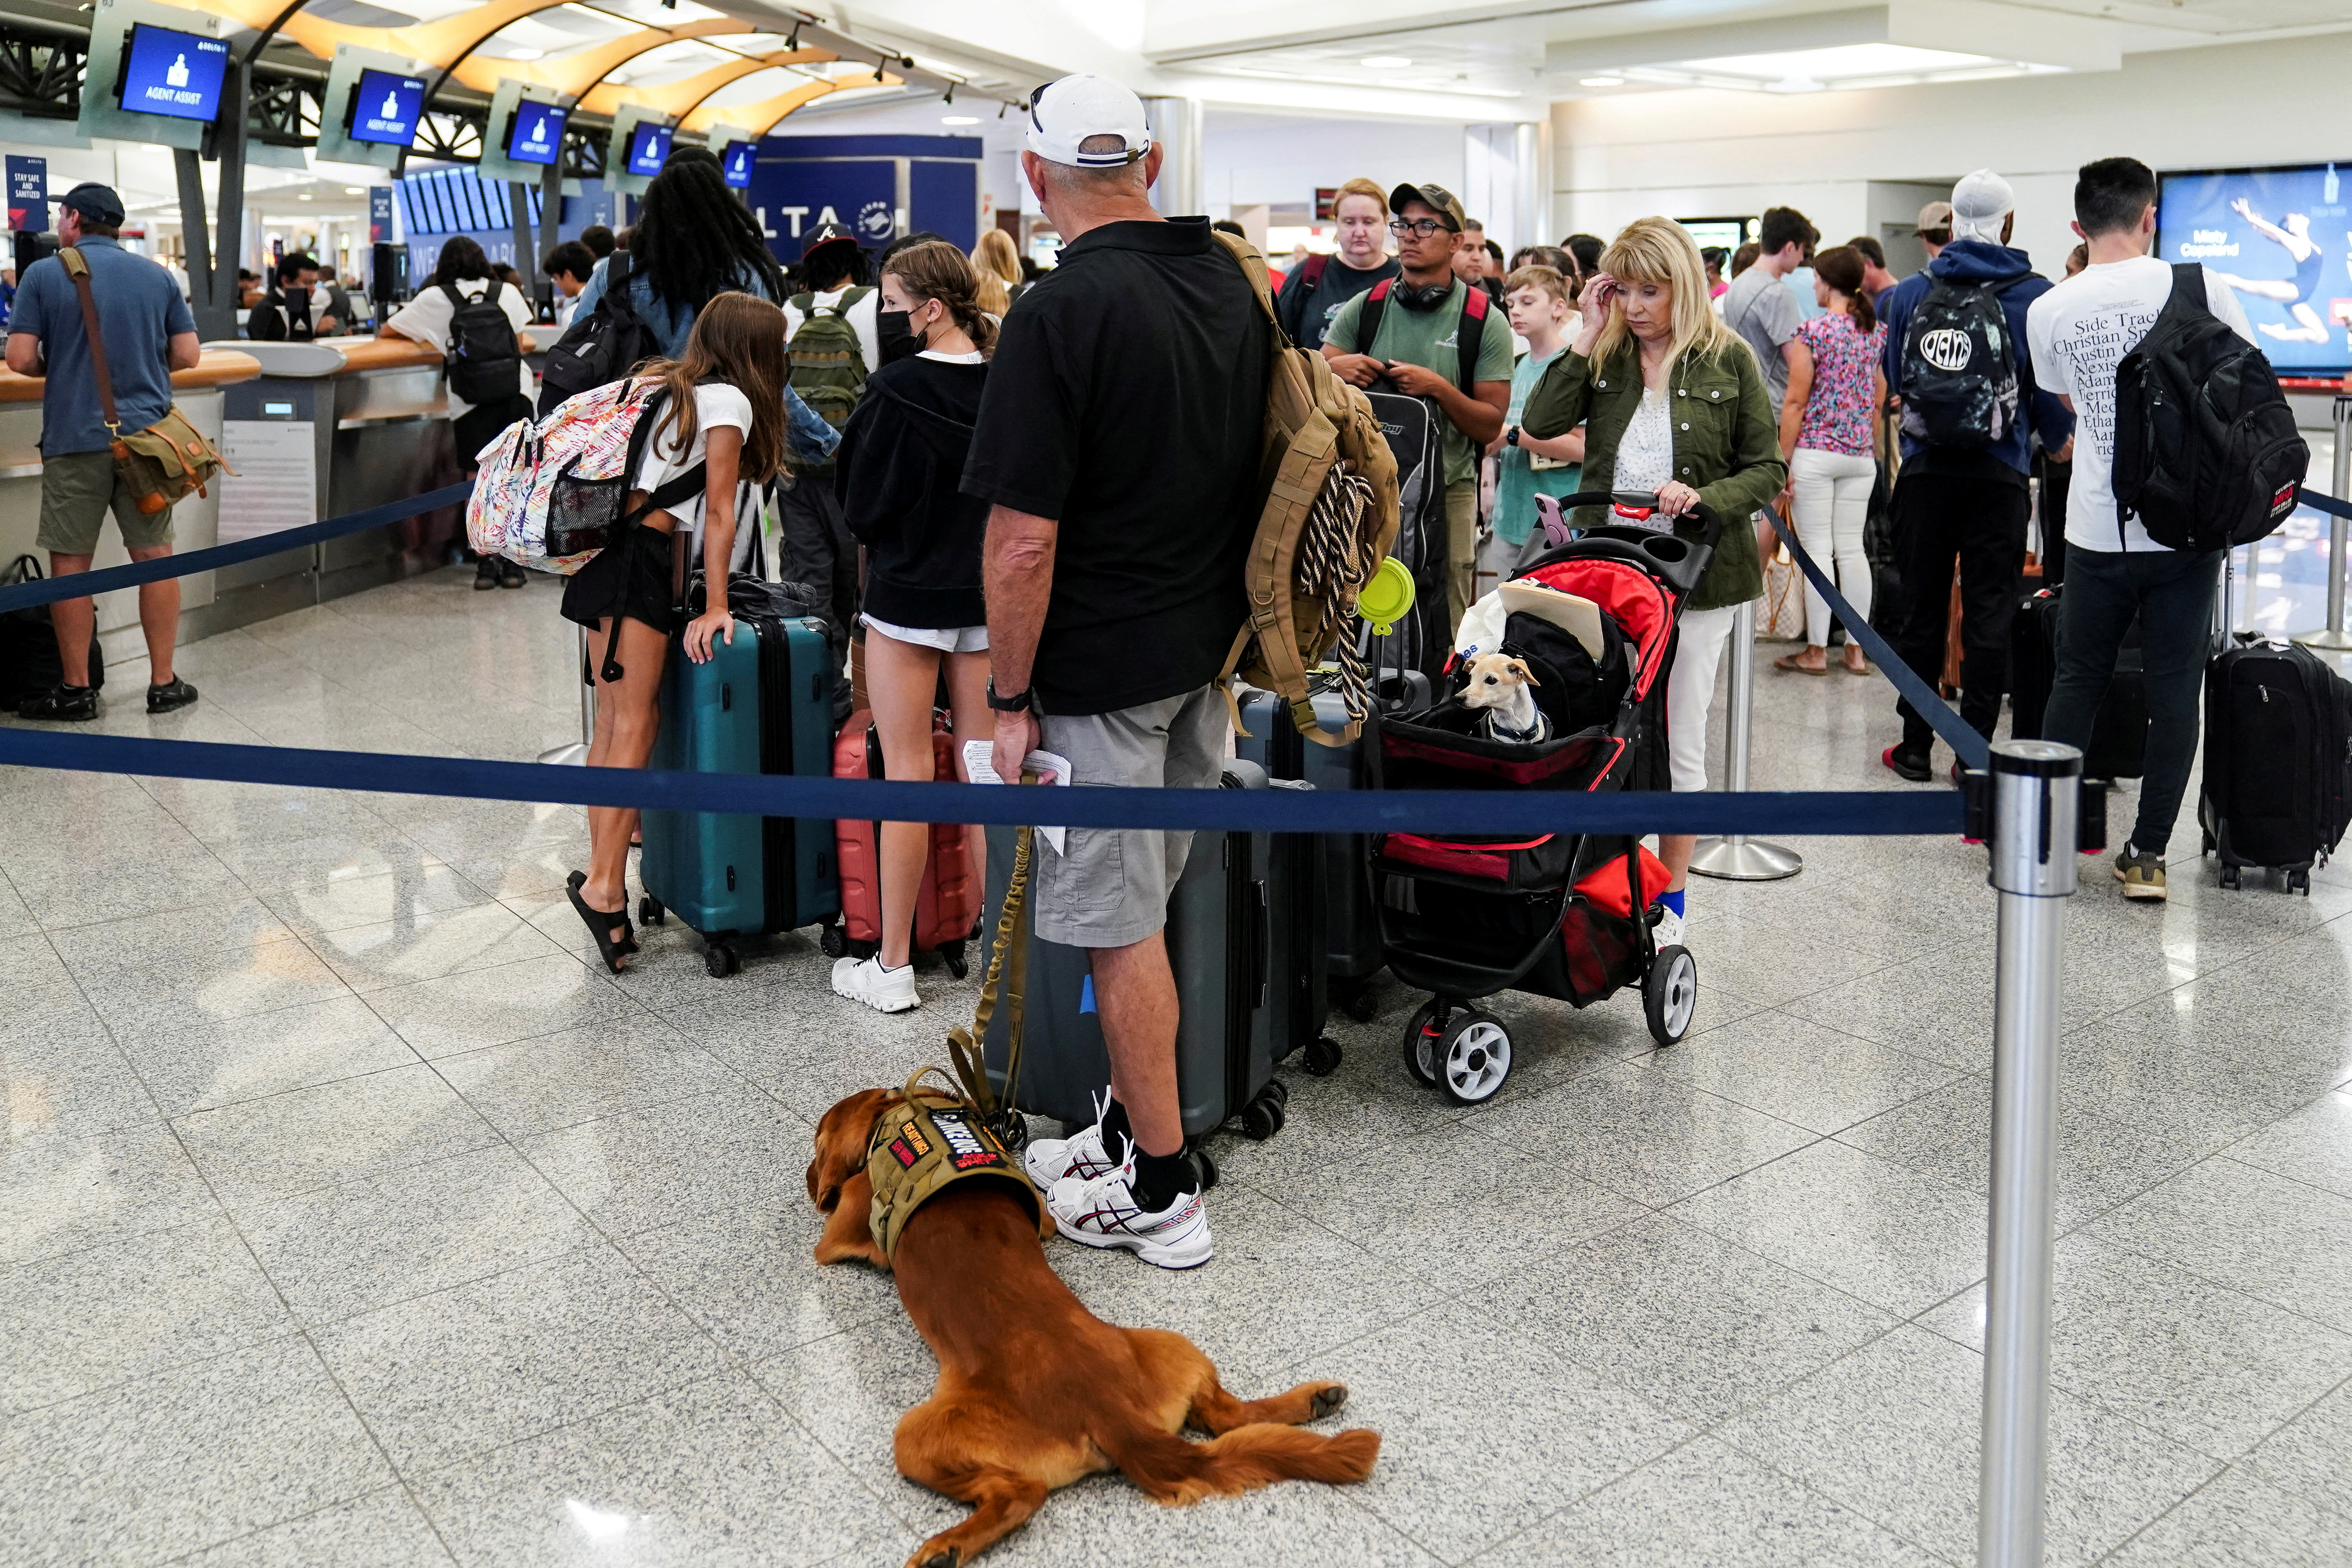 Travelers pack Atlanta airport ahead of July 4th